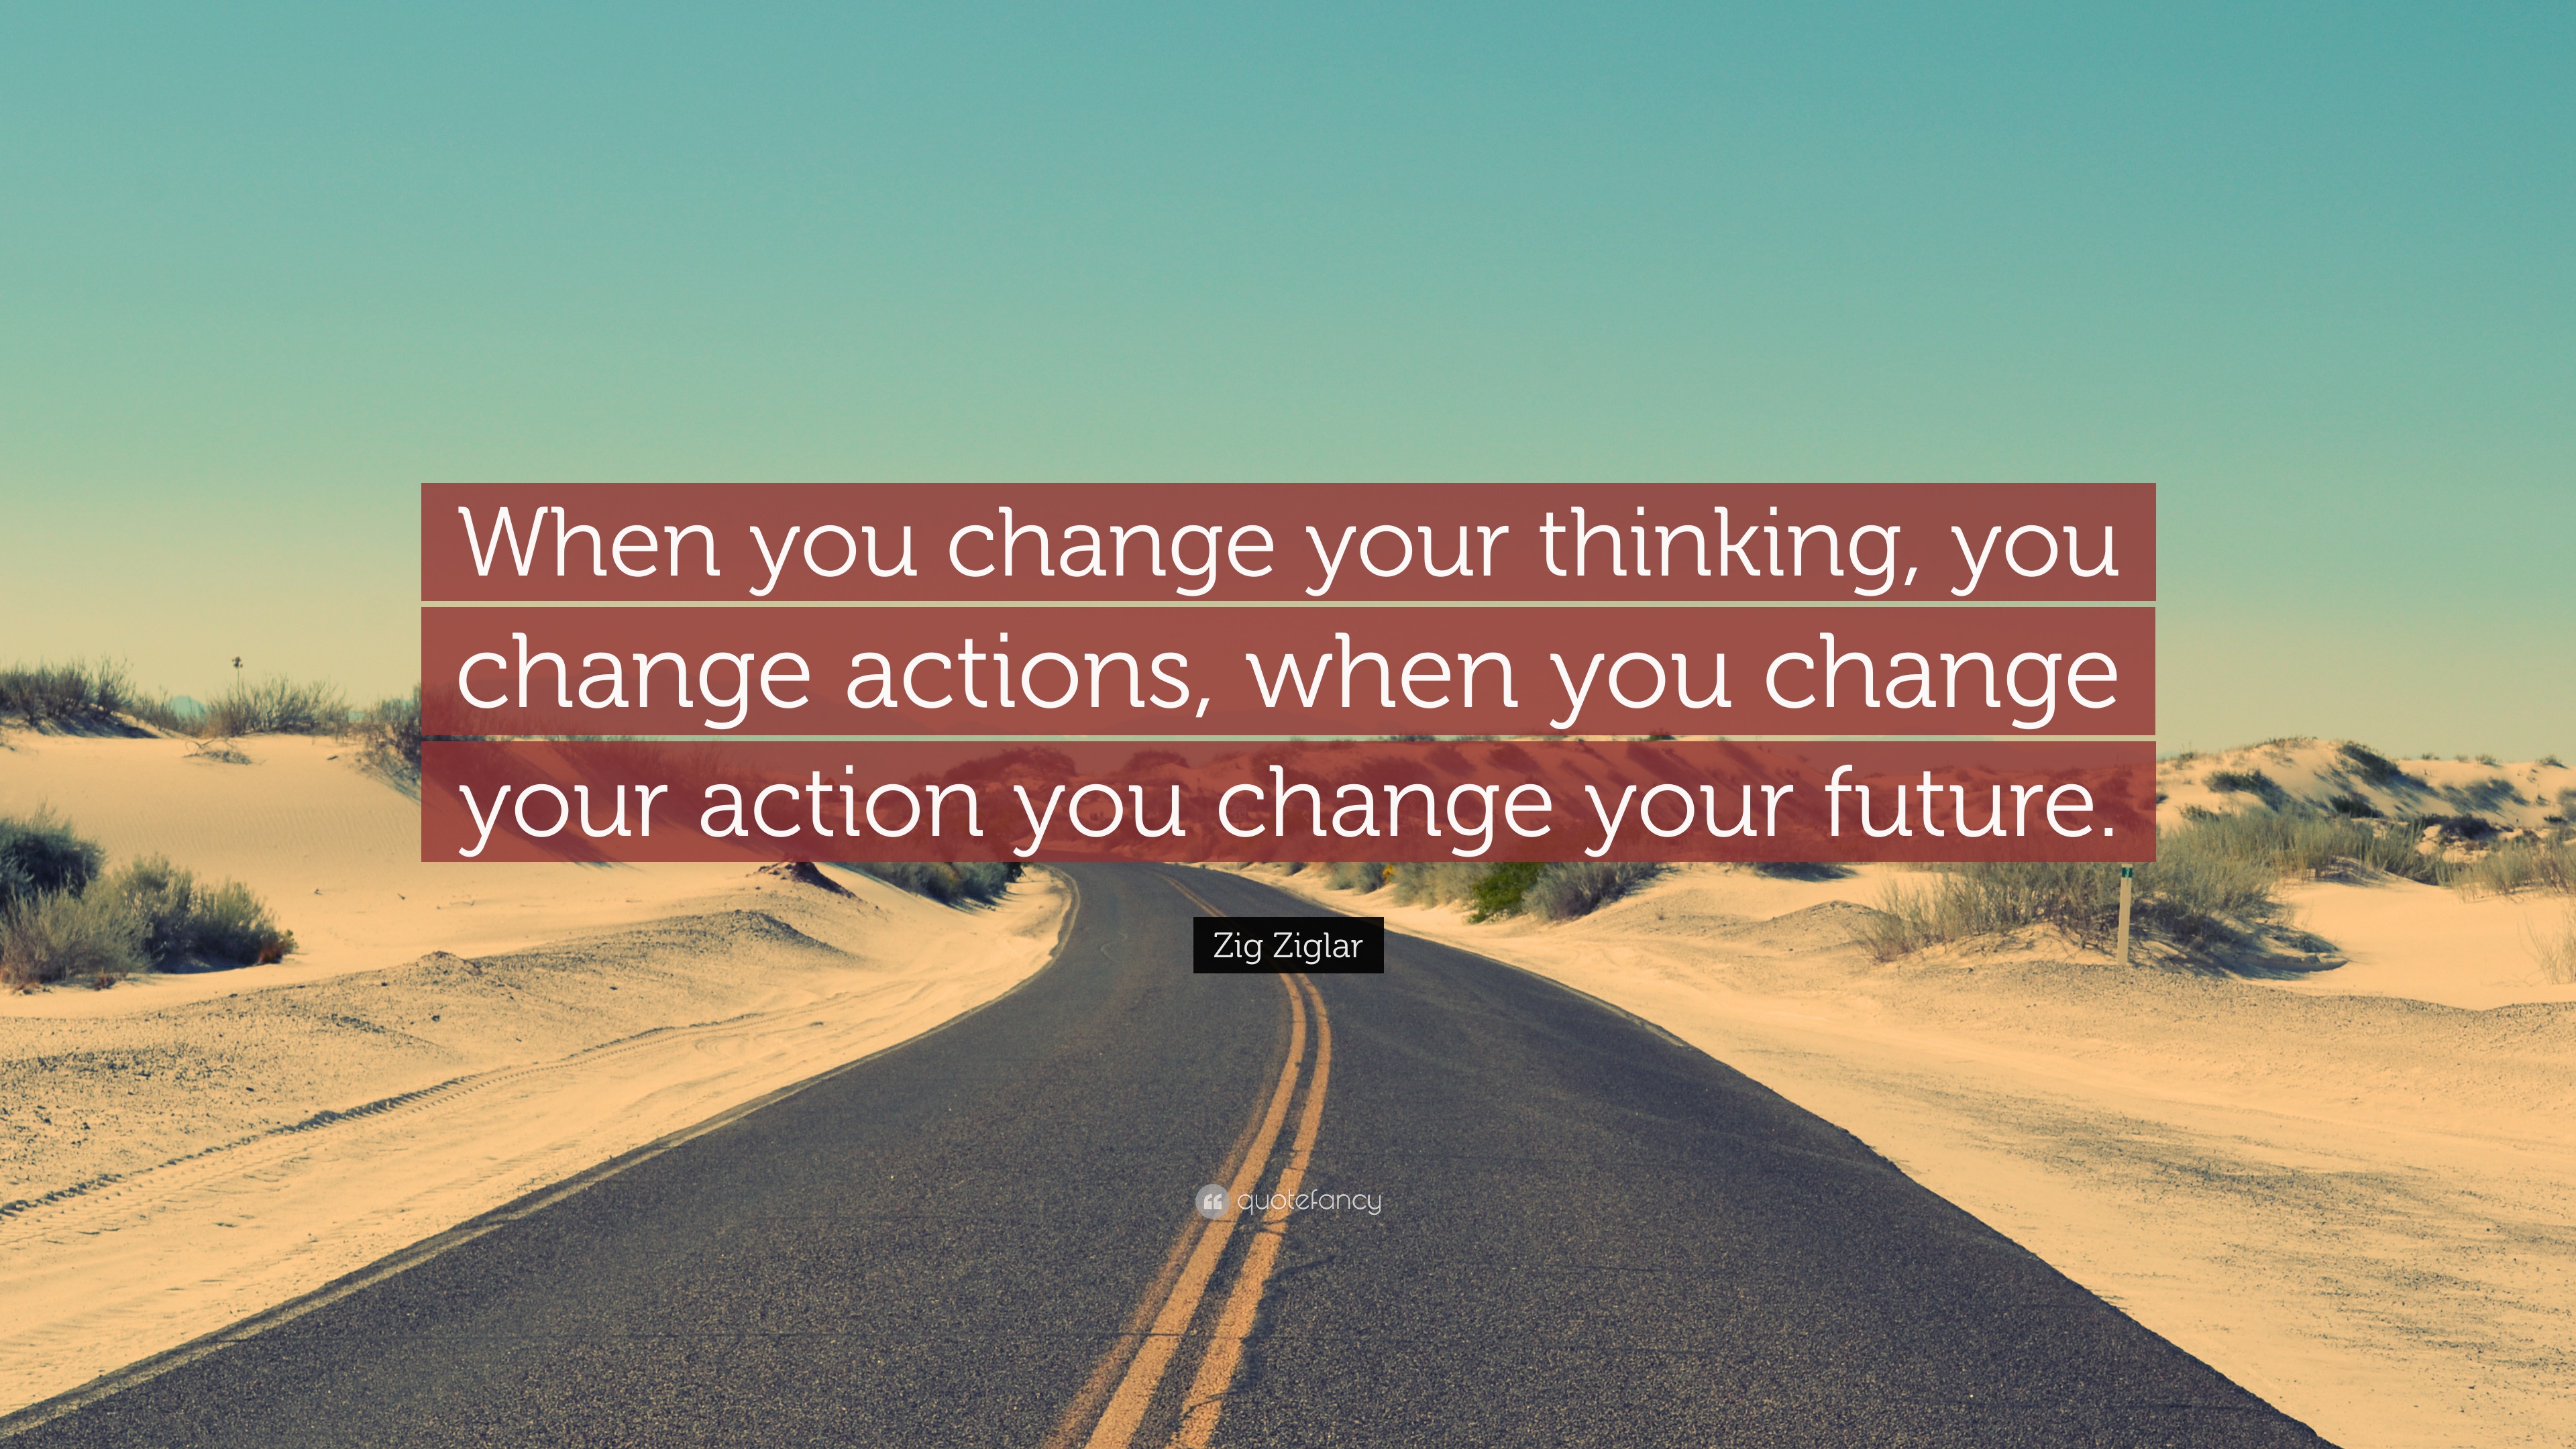 Zig Ziglar Quote: “When you change your thinking, you change actions ...